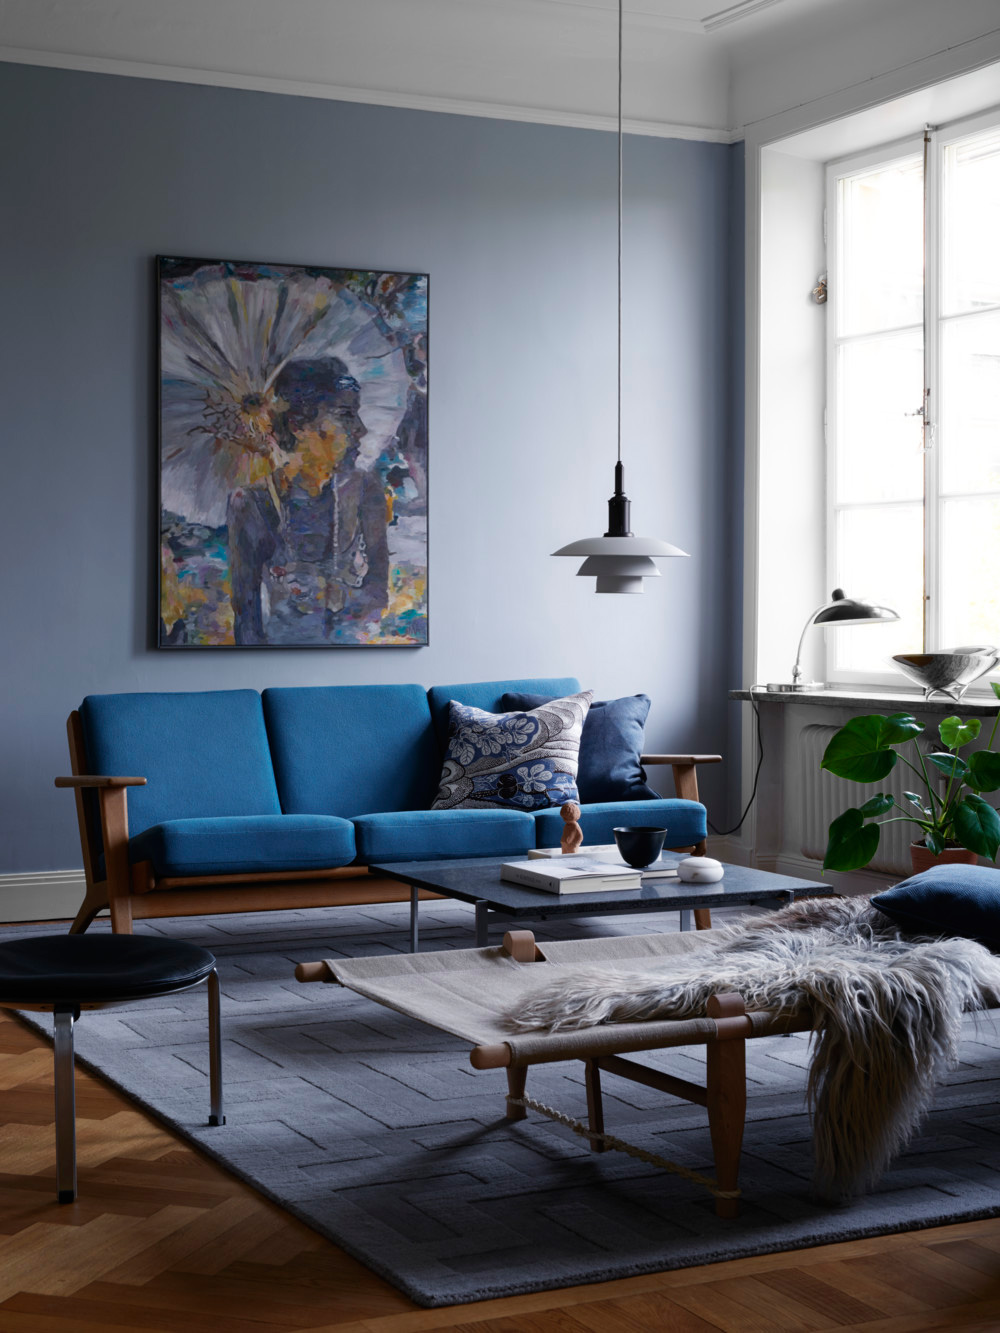 Take a Peek Into a Beautiful Home Filled with Scandinavian Design